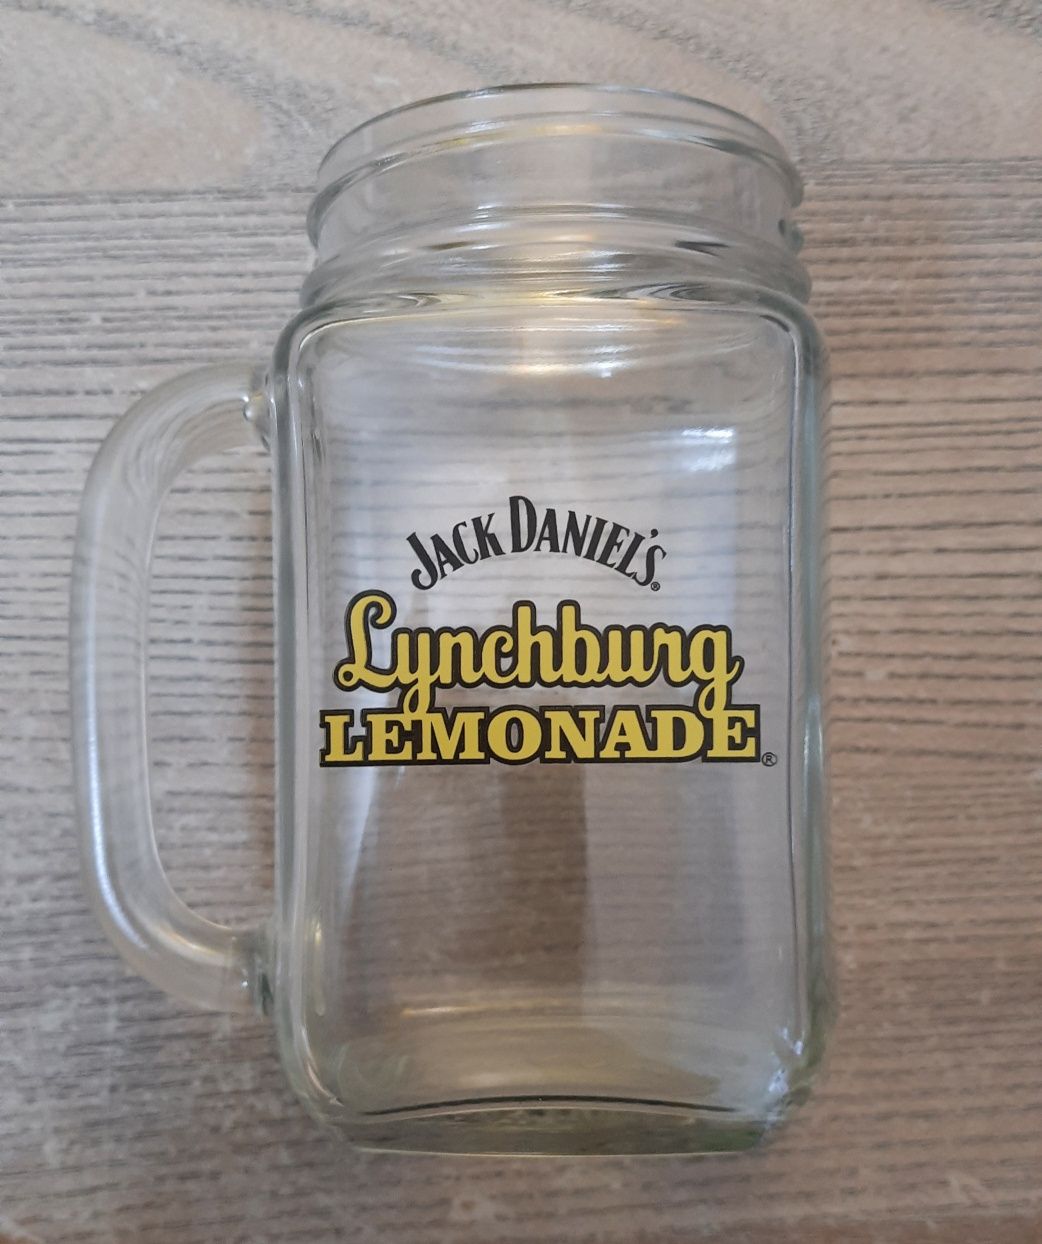 Szklanka Jack Daniels Lynchburg Lemonade